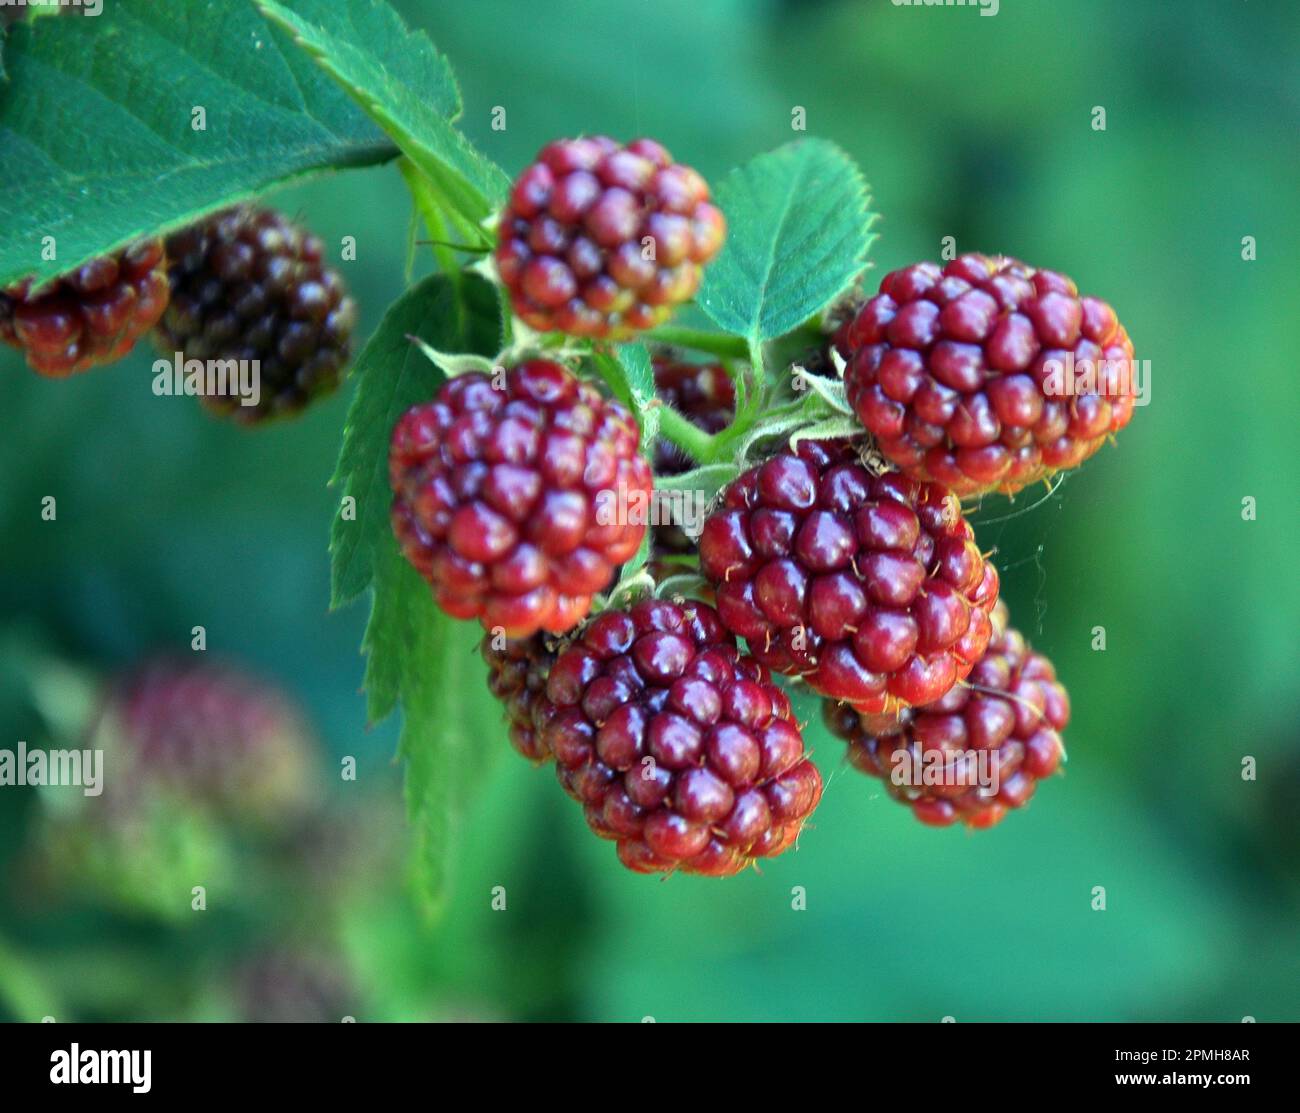 On the branch bush ripen the blackberries (Rubus fruticosus) Stock Photo